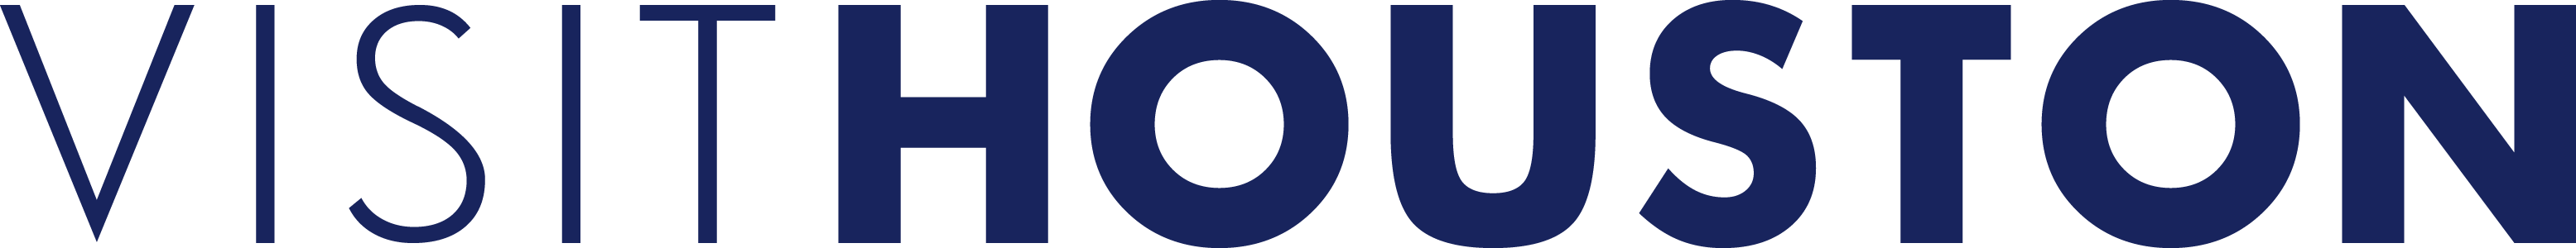 Visit Houston Logo - Portable Network Graphics (3111x300)